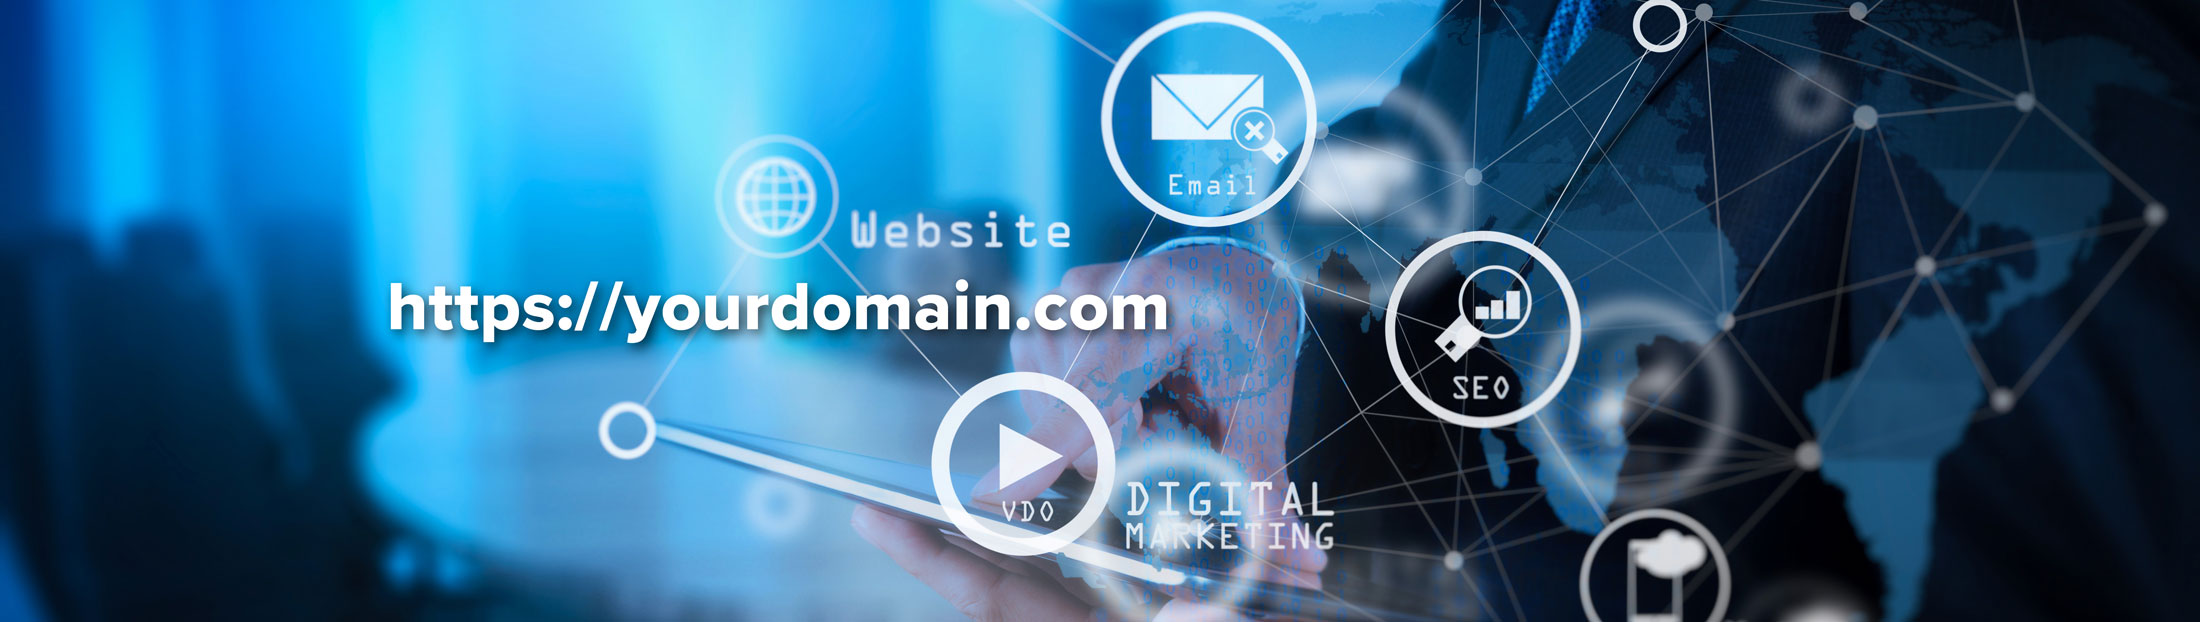 Domain Name Registration | Grey Media Services